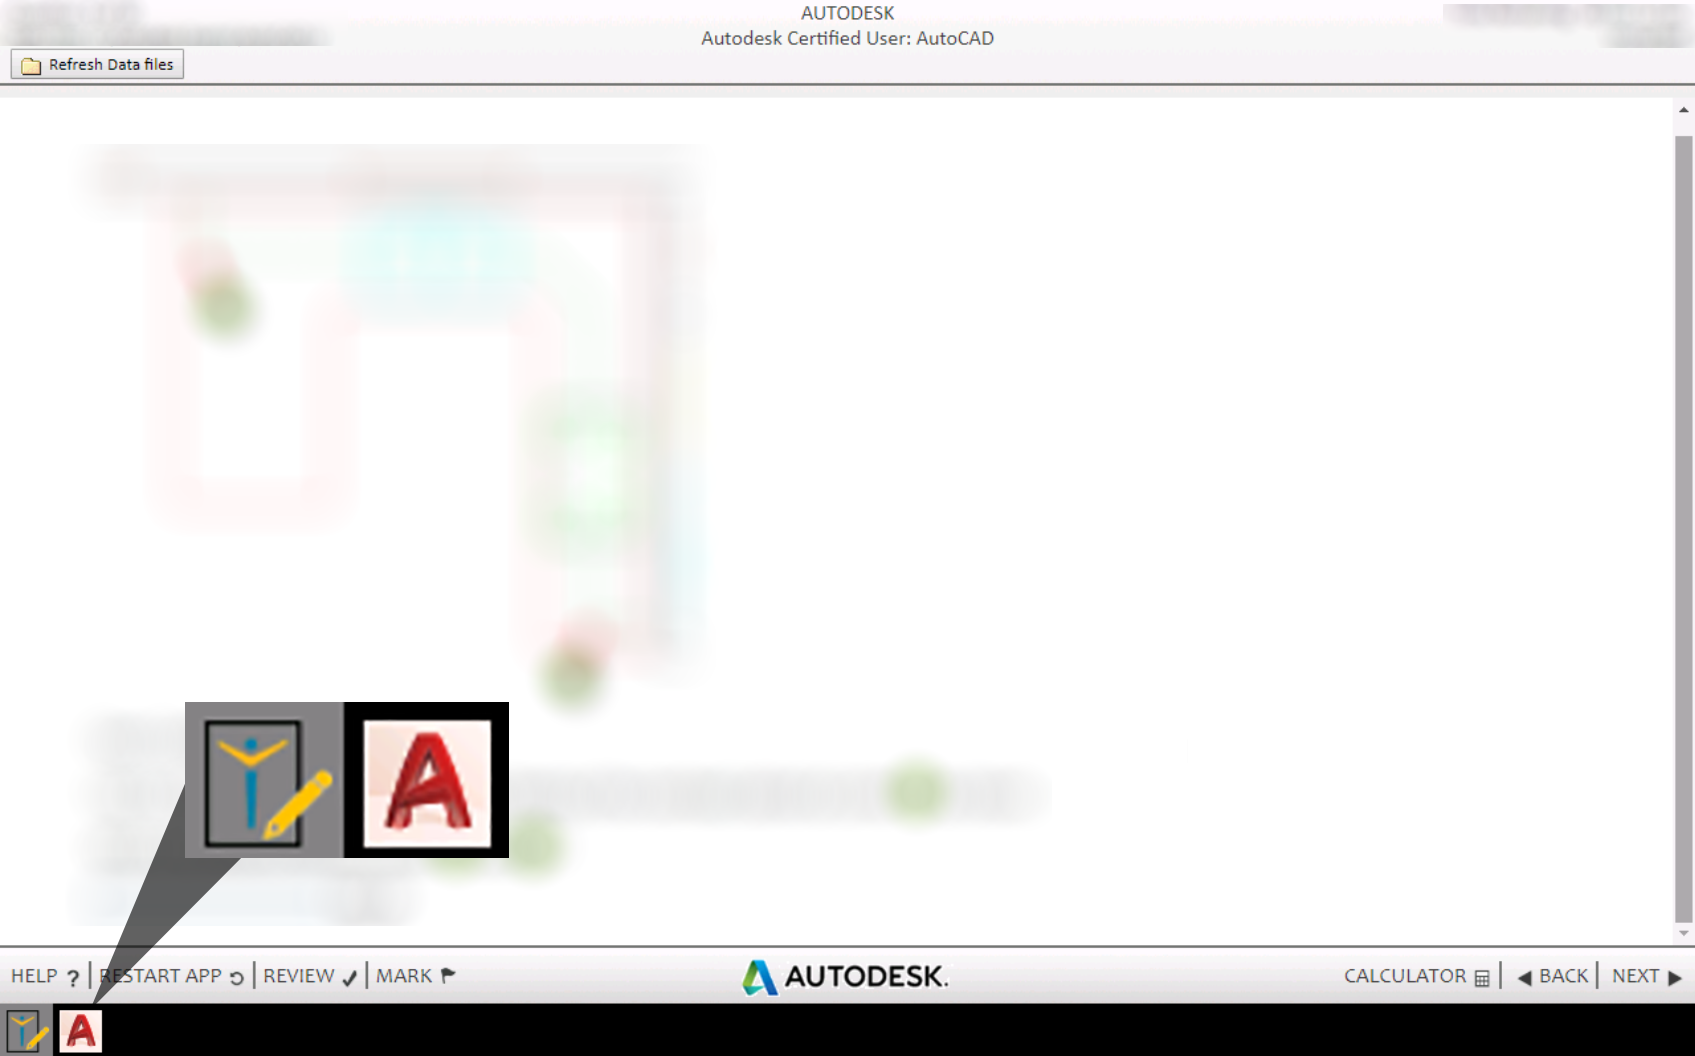 Autodesk Toolbar